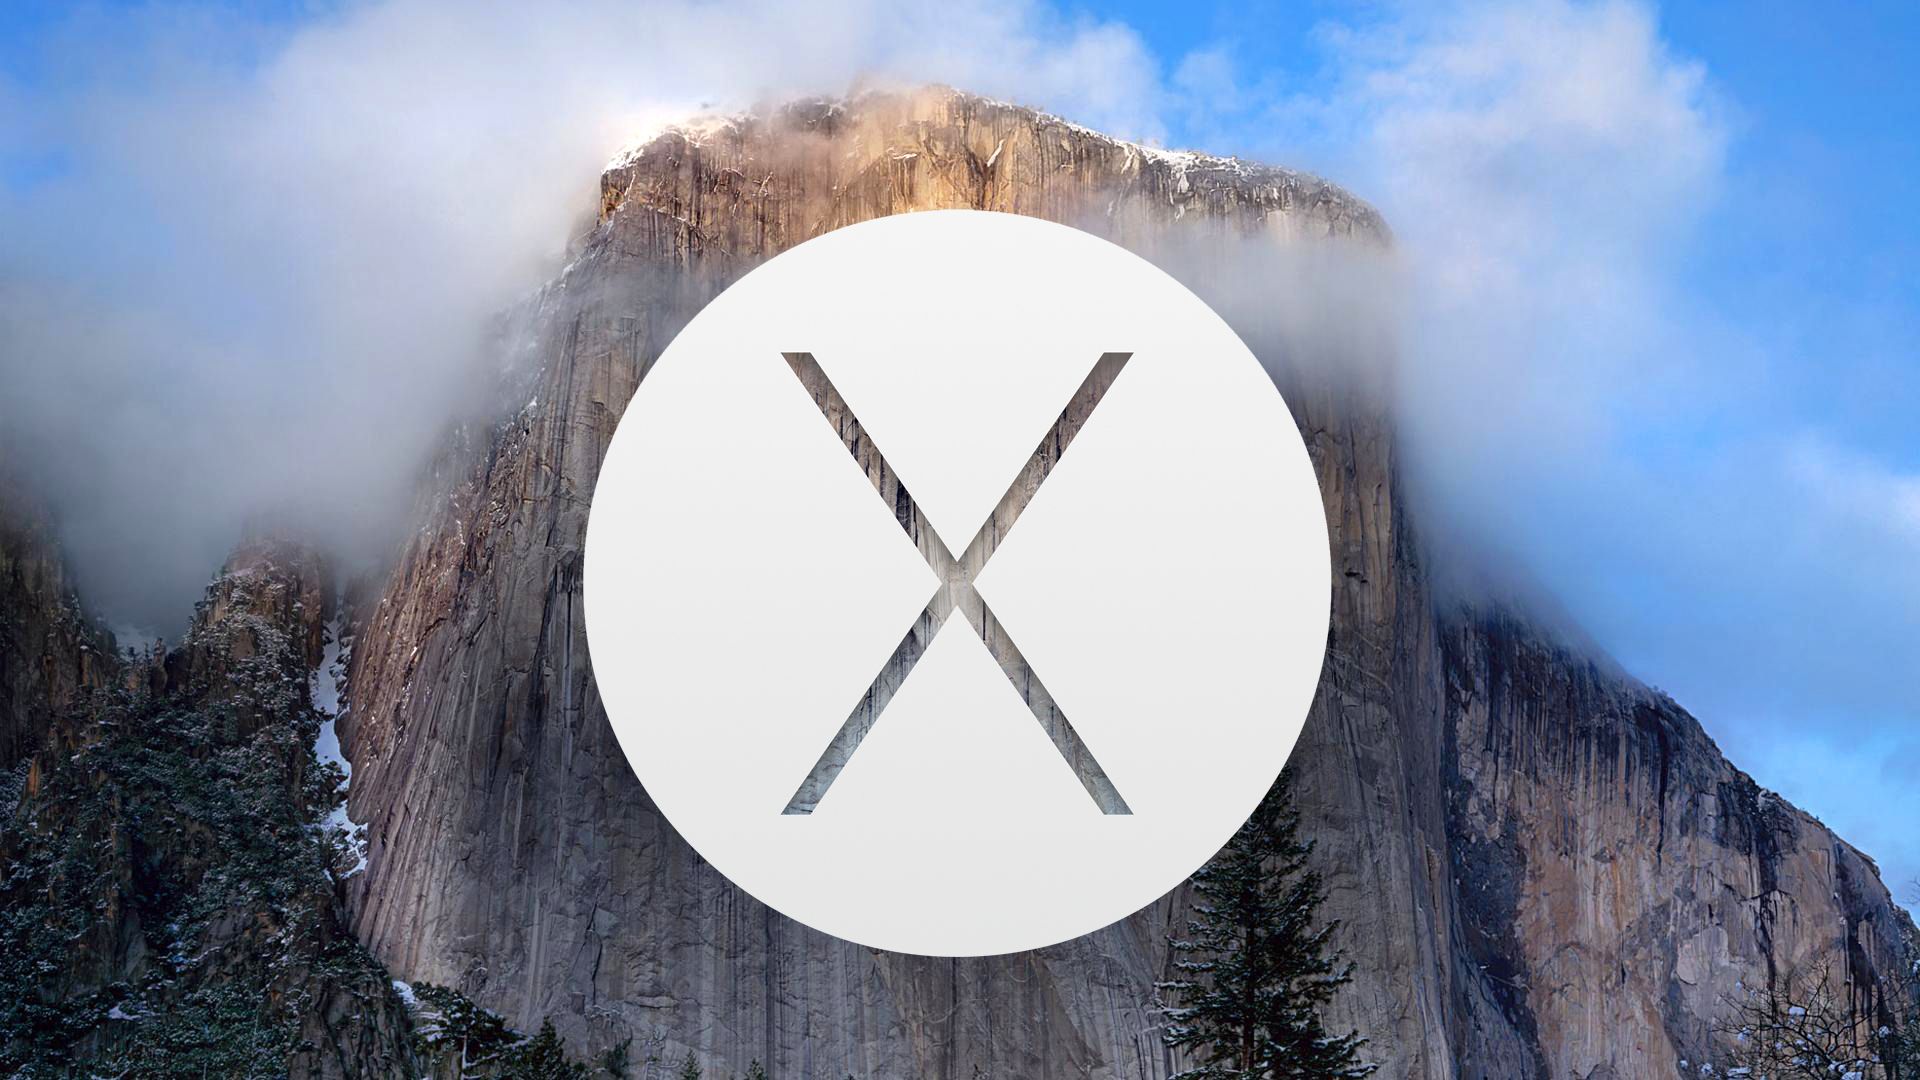 appleworks 6 free download for mac